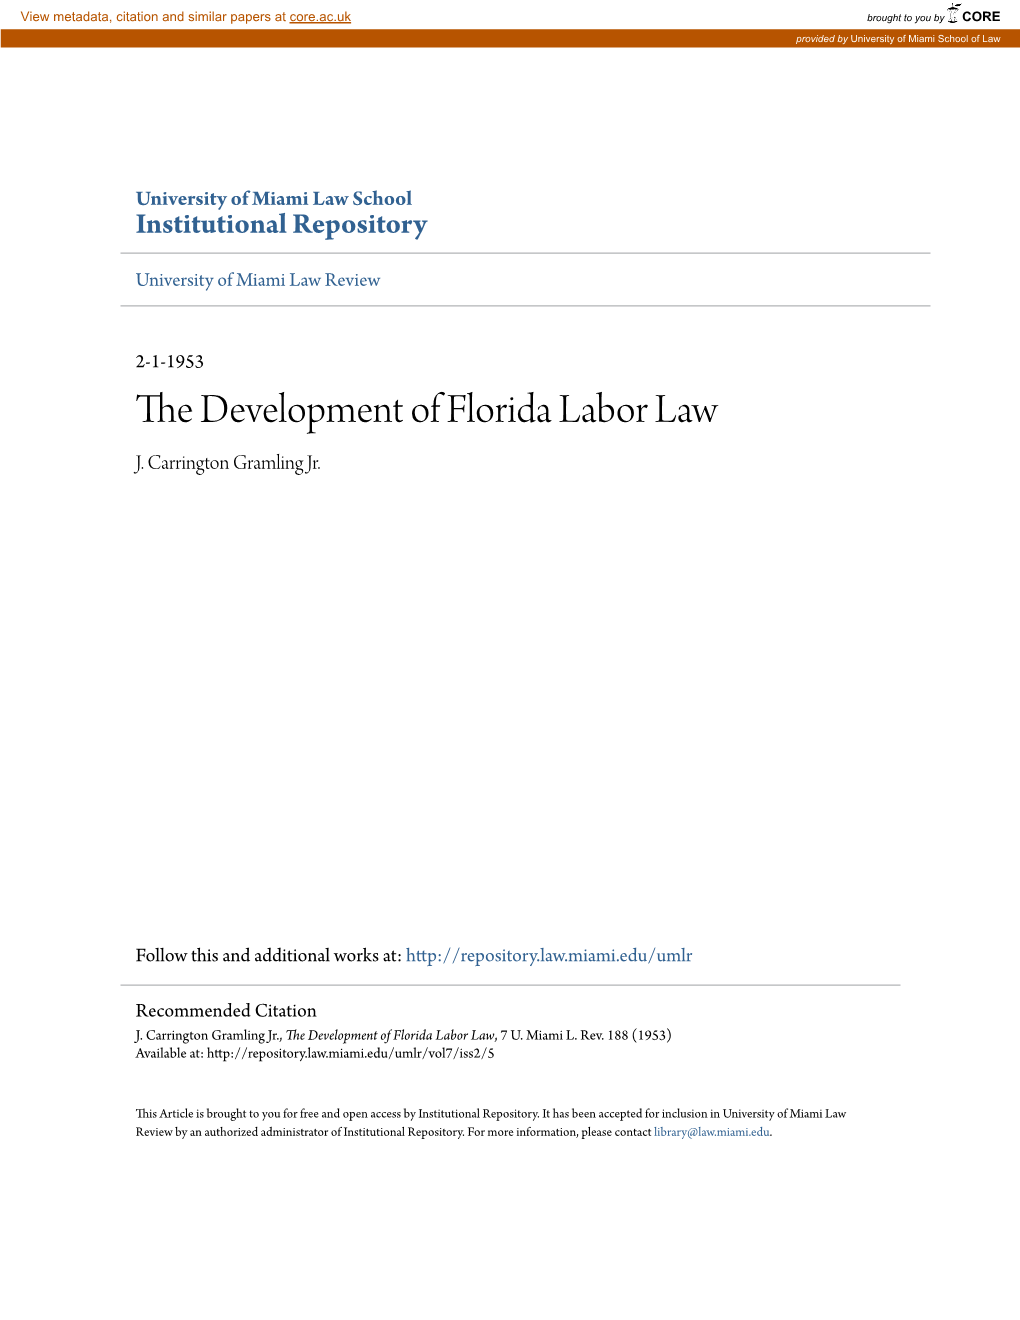 The Development of Florida Labor Law, 7 U